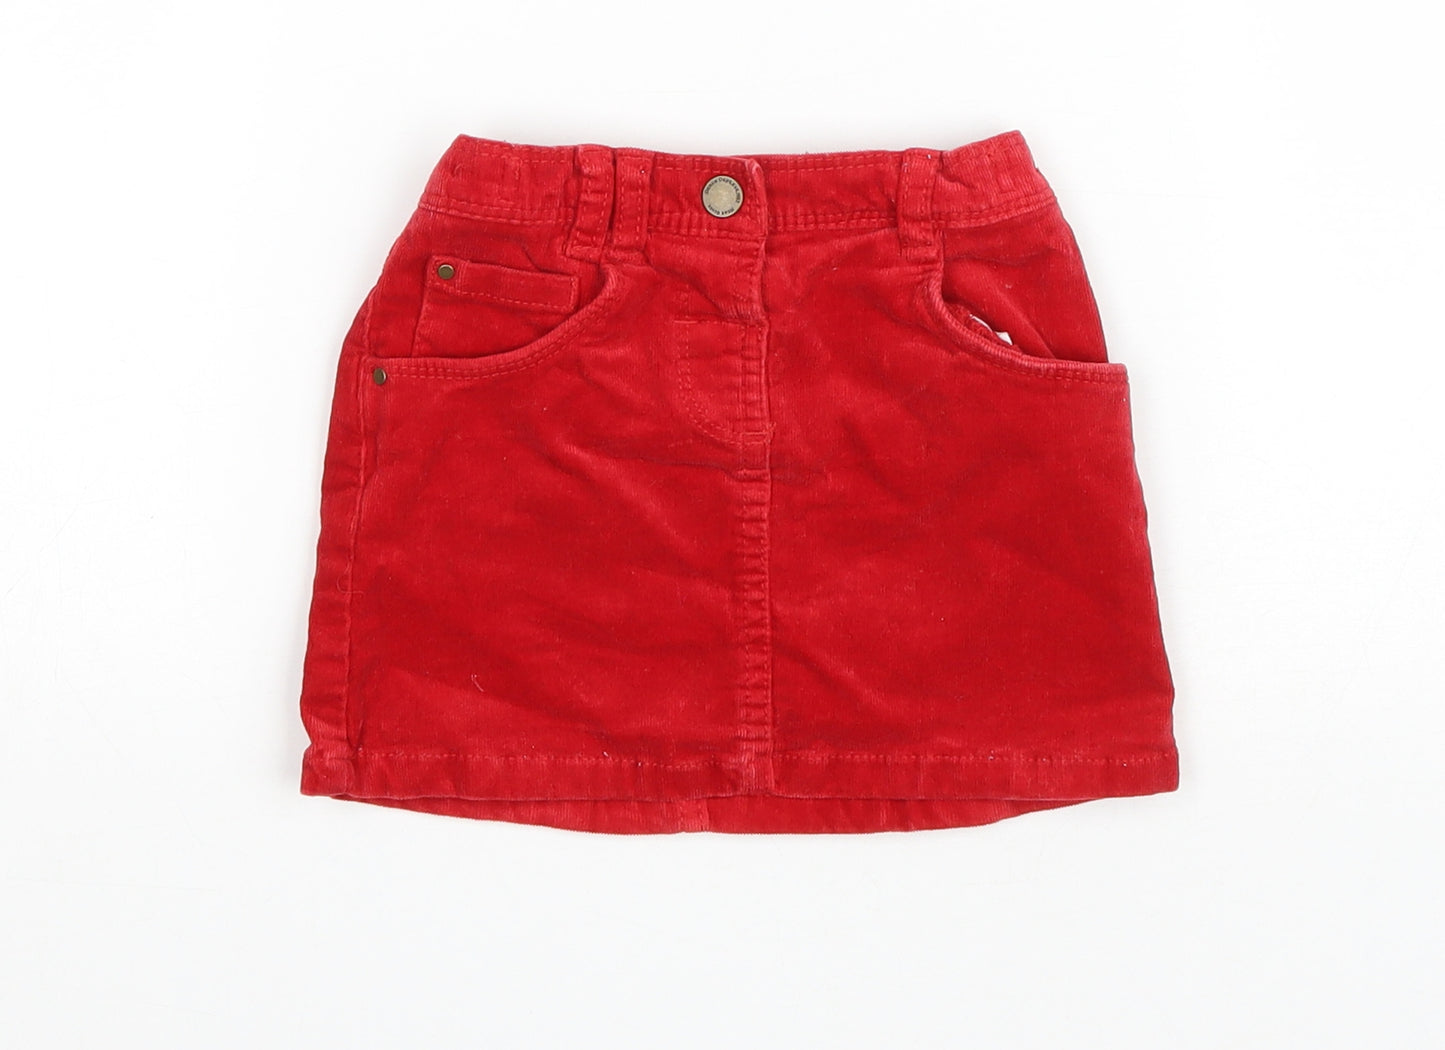 TU Girls Red Cotton A-Line Skirt Size 12-18 Months Button